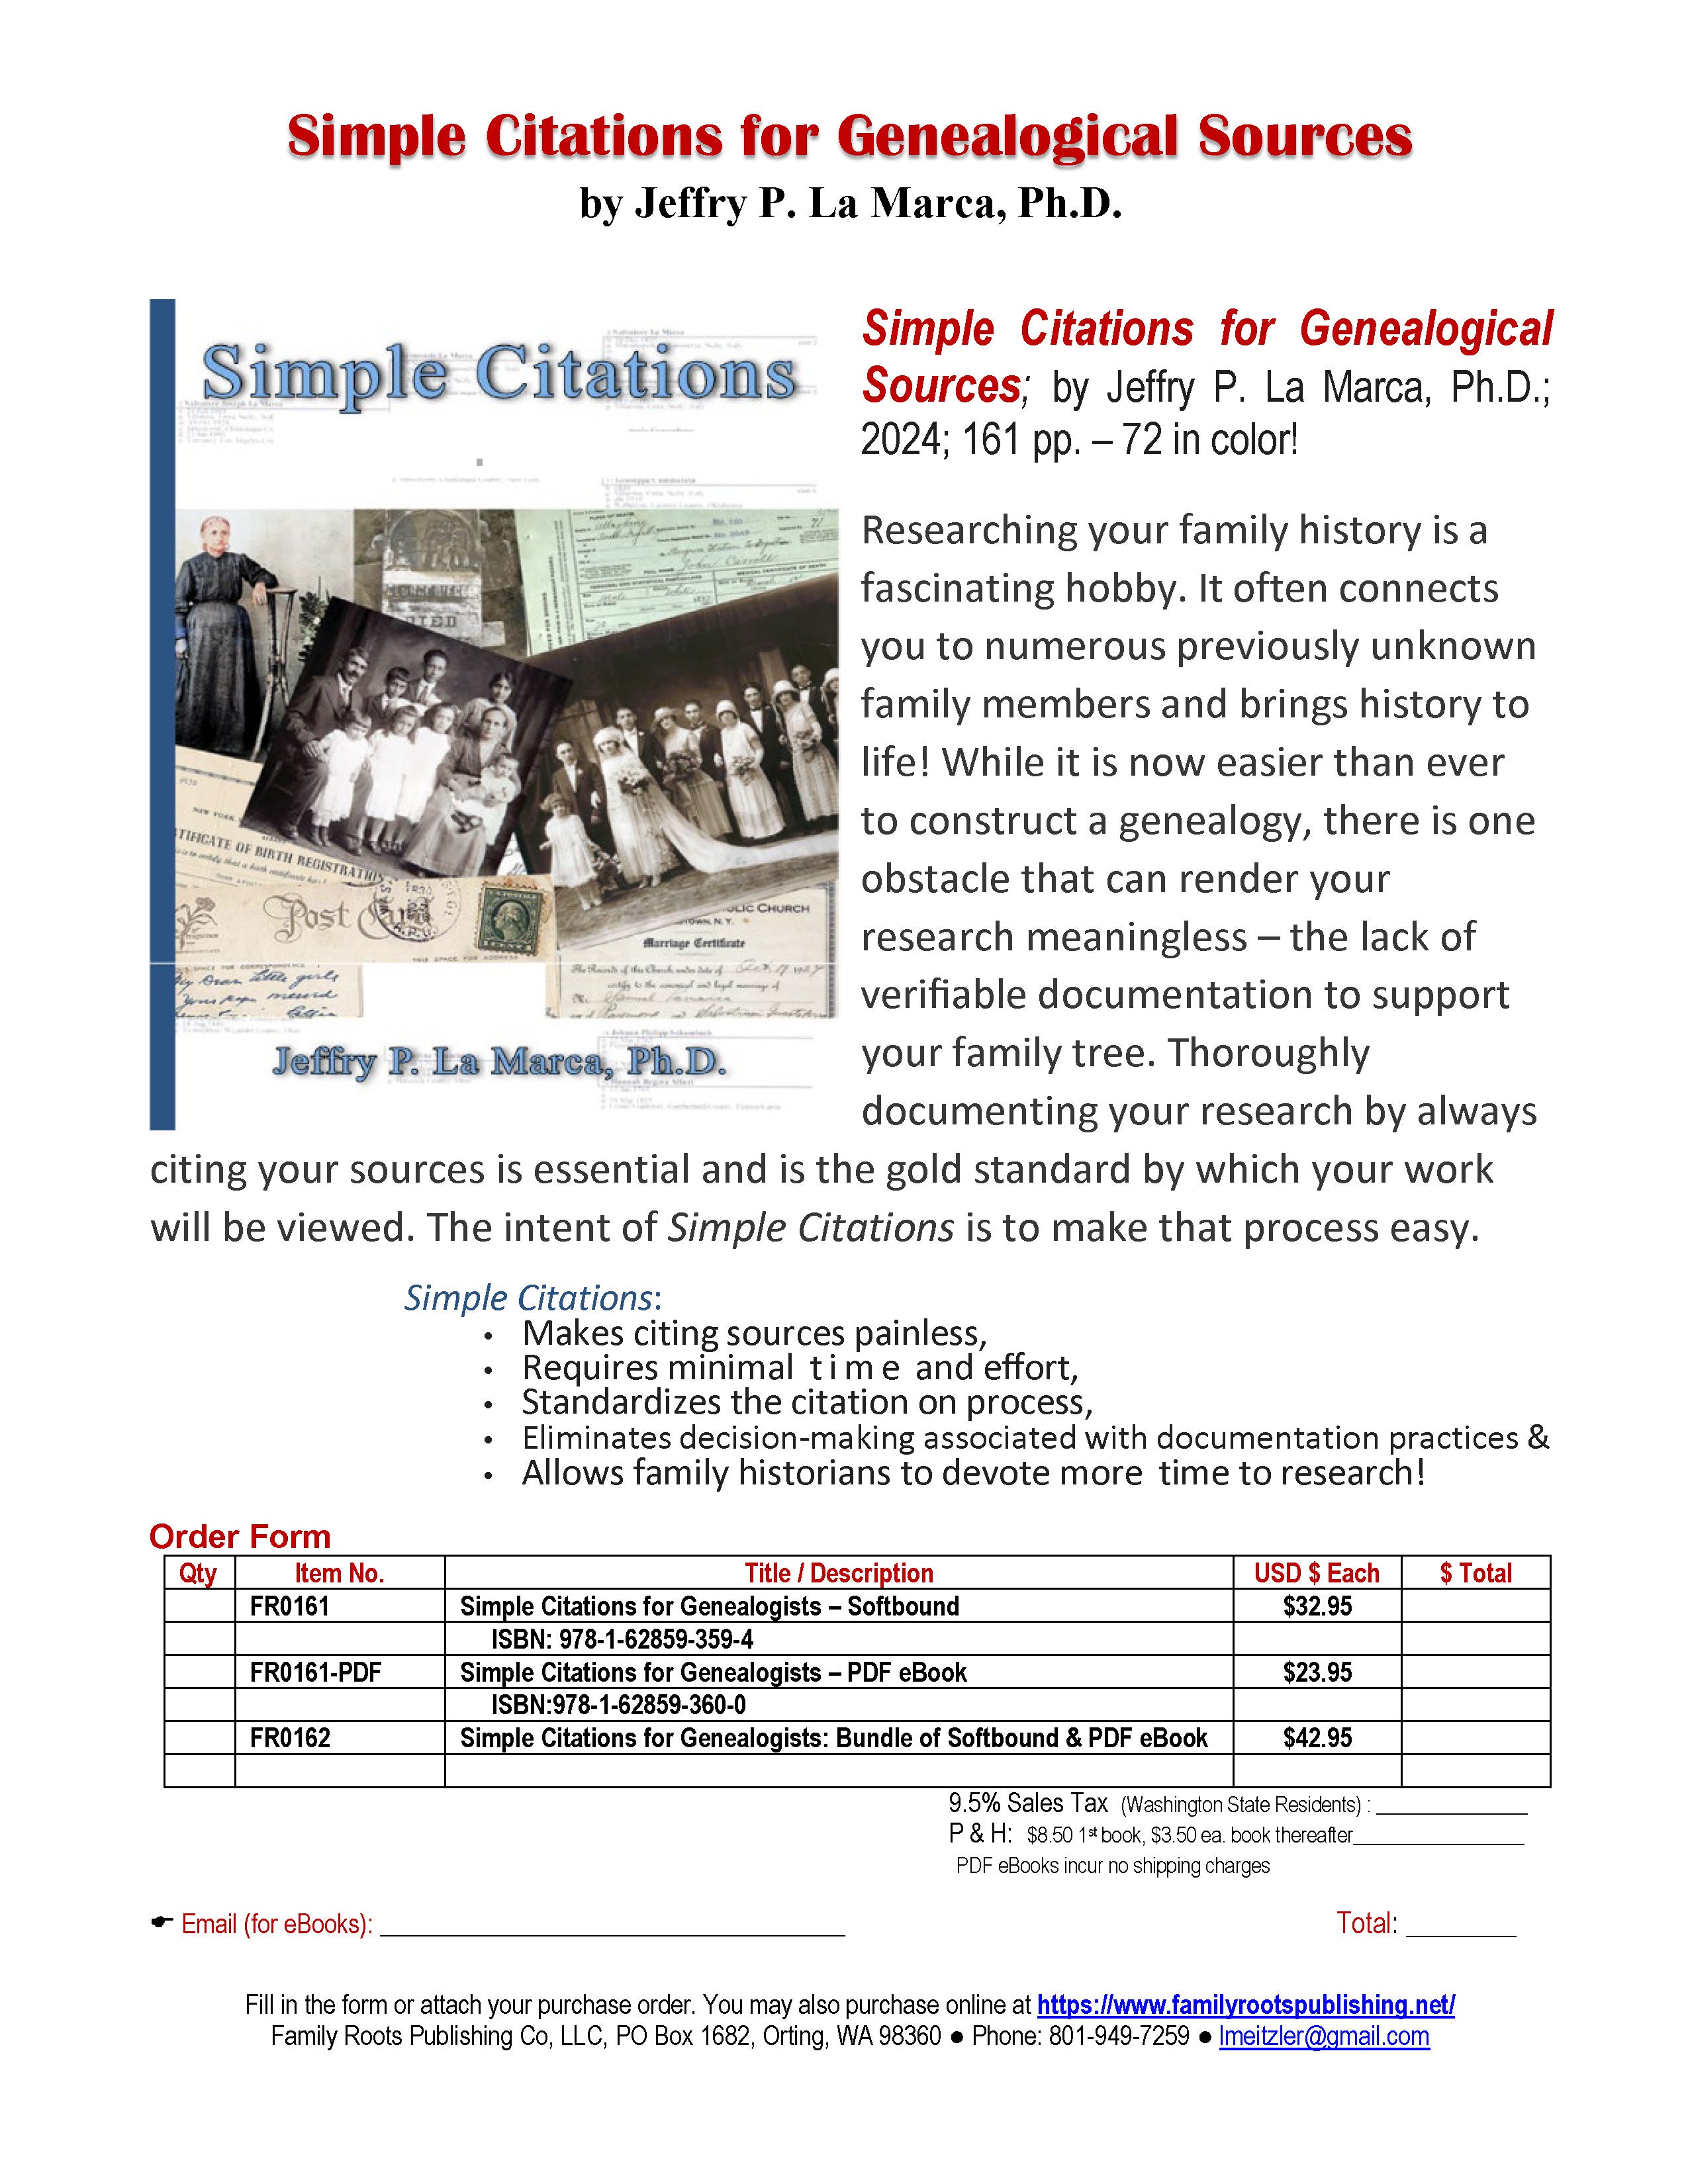 FREE FLYER: Downloadable PDF flyer: Simple Citations for Genealogical Sources